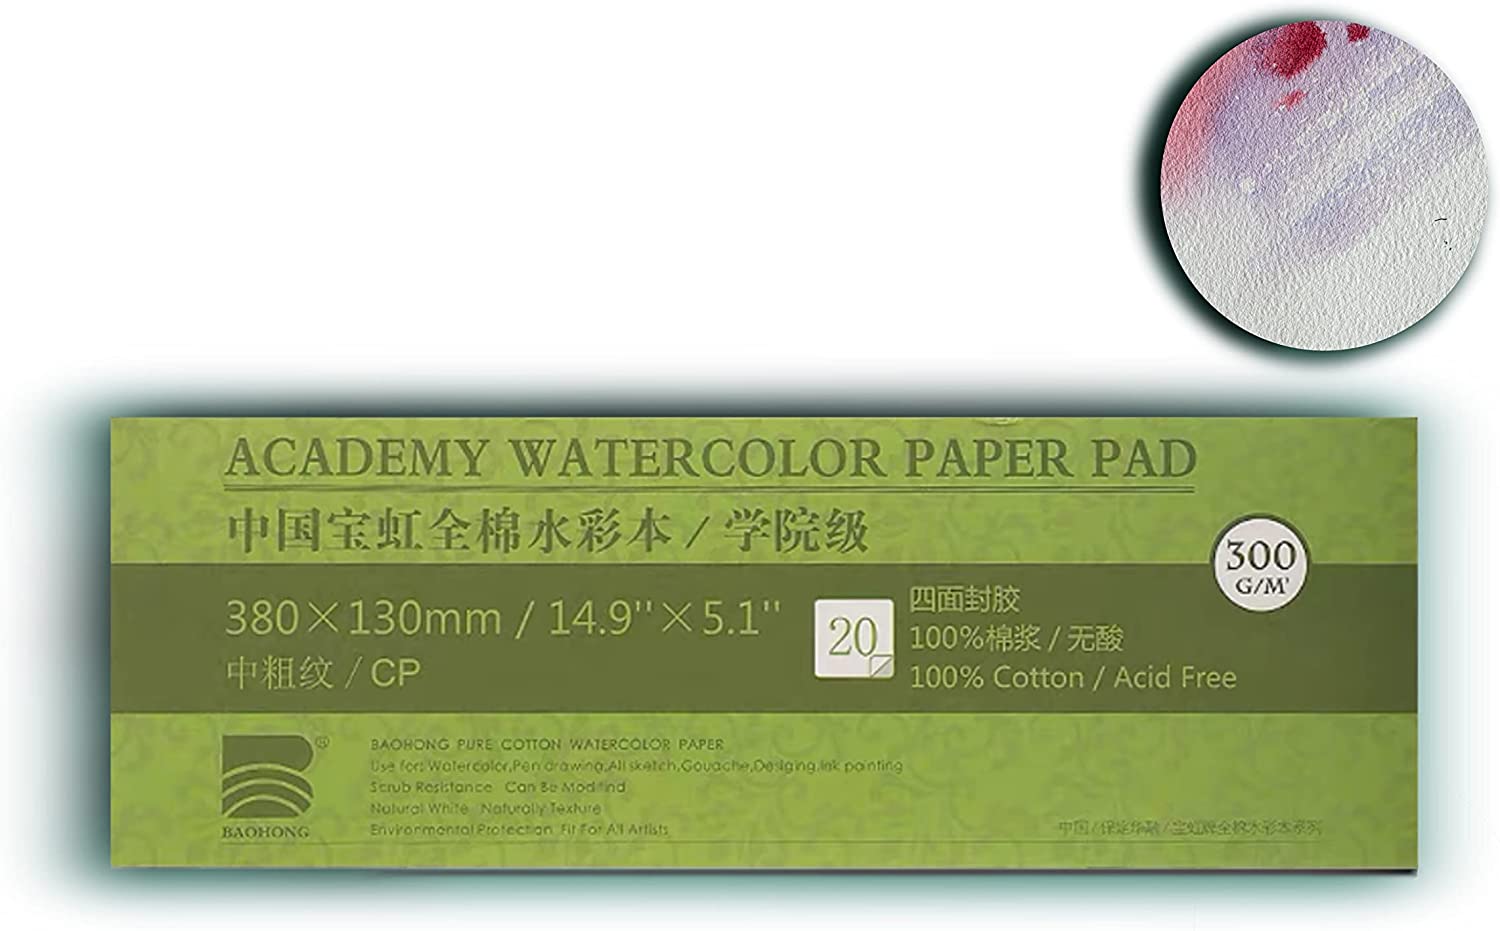 BAOHONG ACADEMY WATERCOLOR PAPER PAD 310X210MM (12 X 8 INCH) HOT